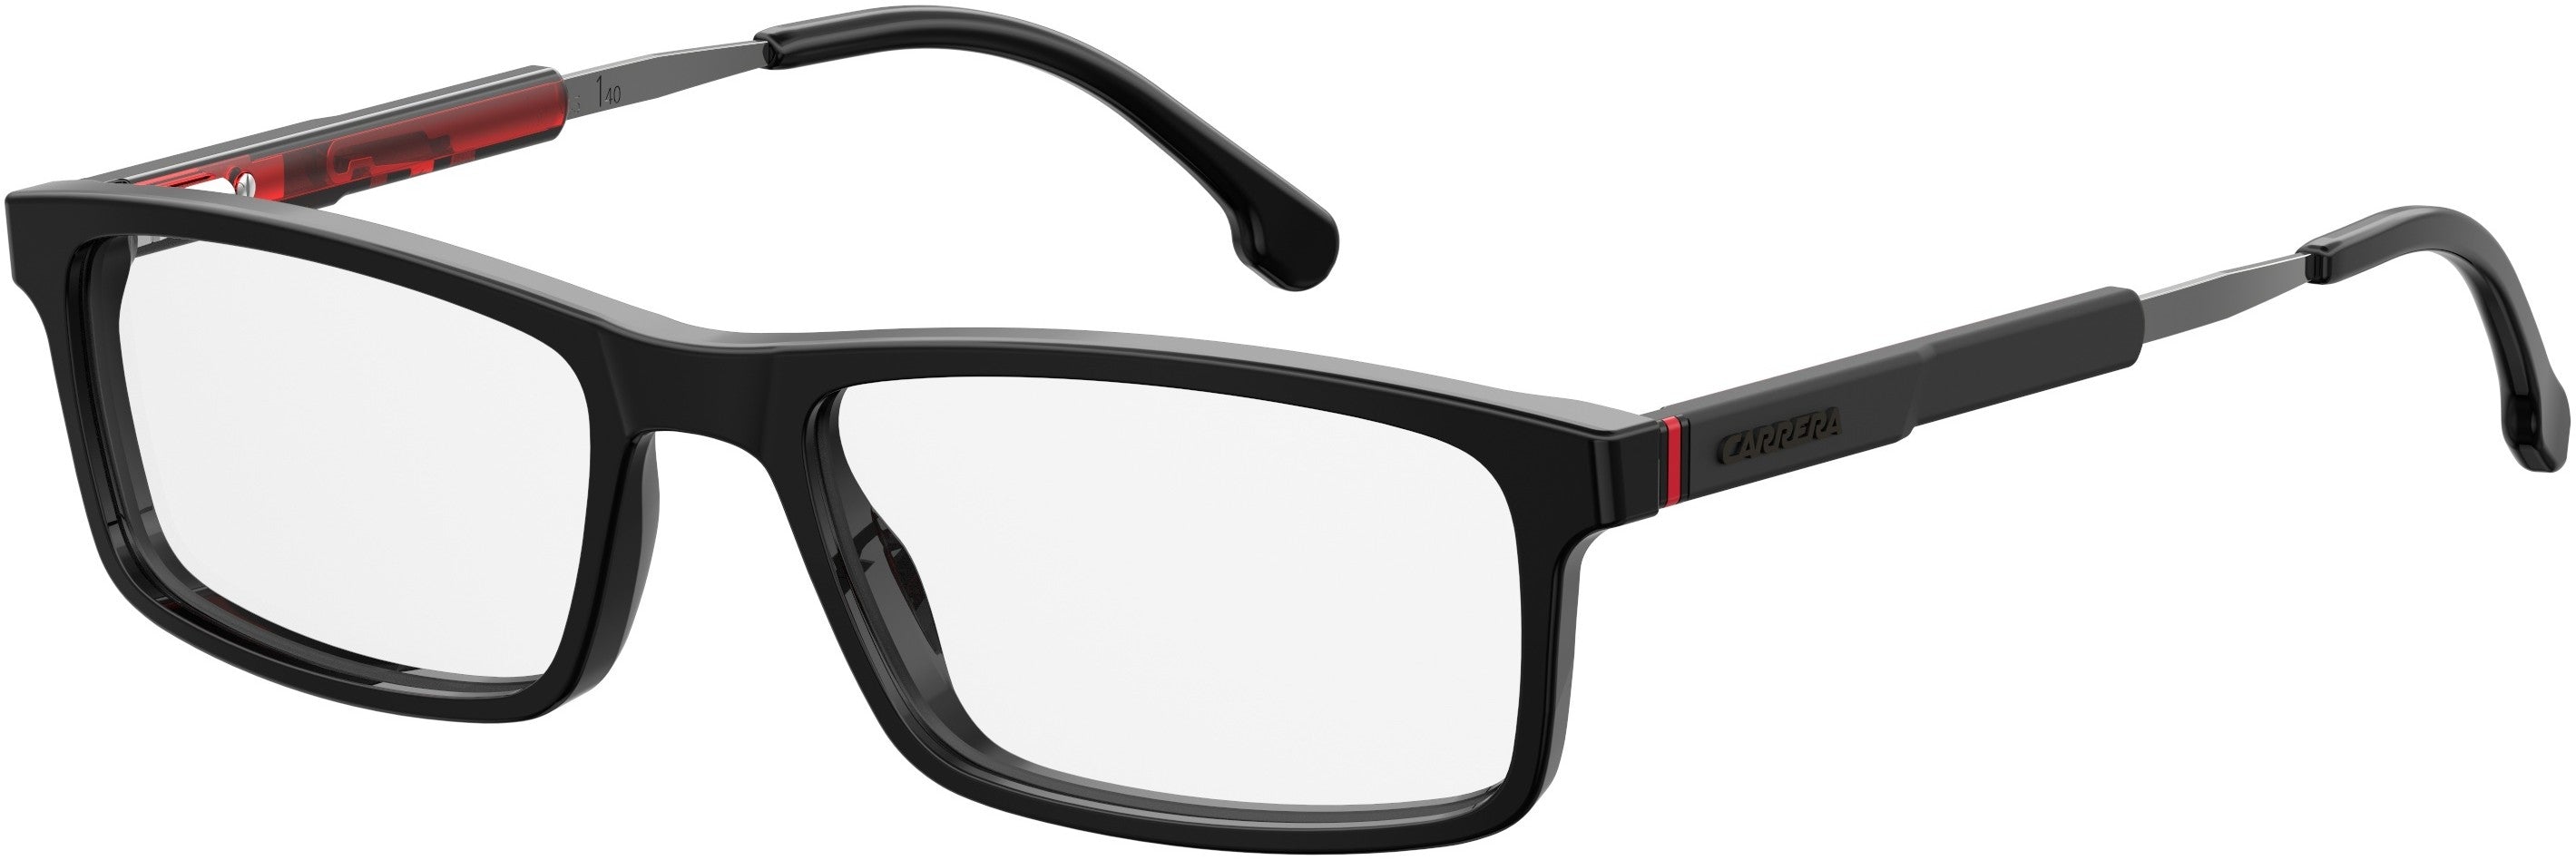  Carrera 8837 Rectangular Eyeglasses 0807-0807  Black (00 Demo Lens)